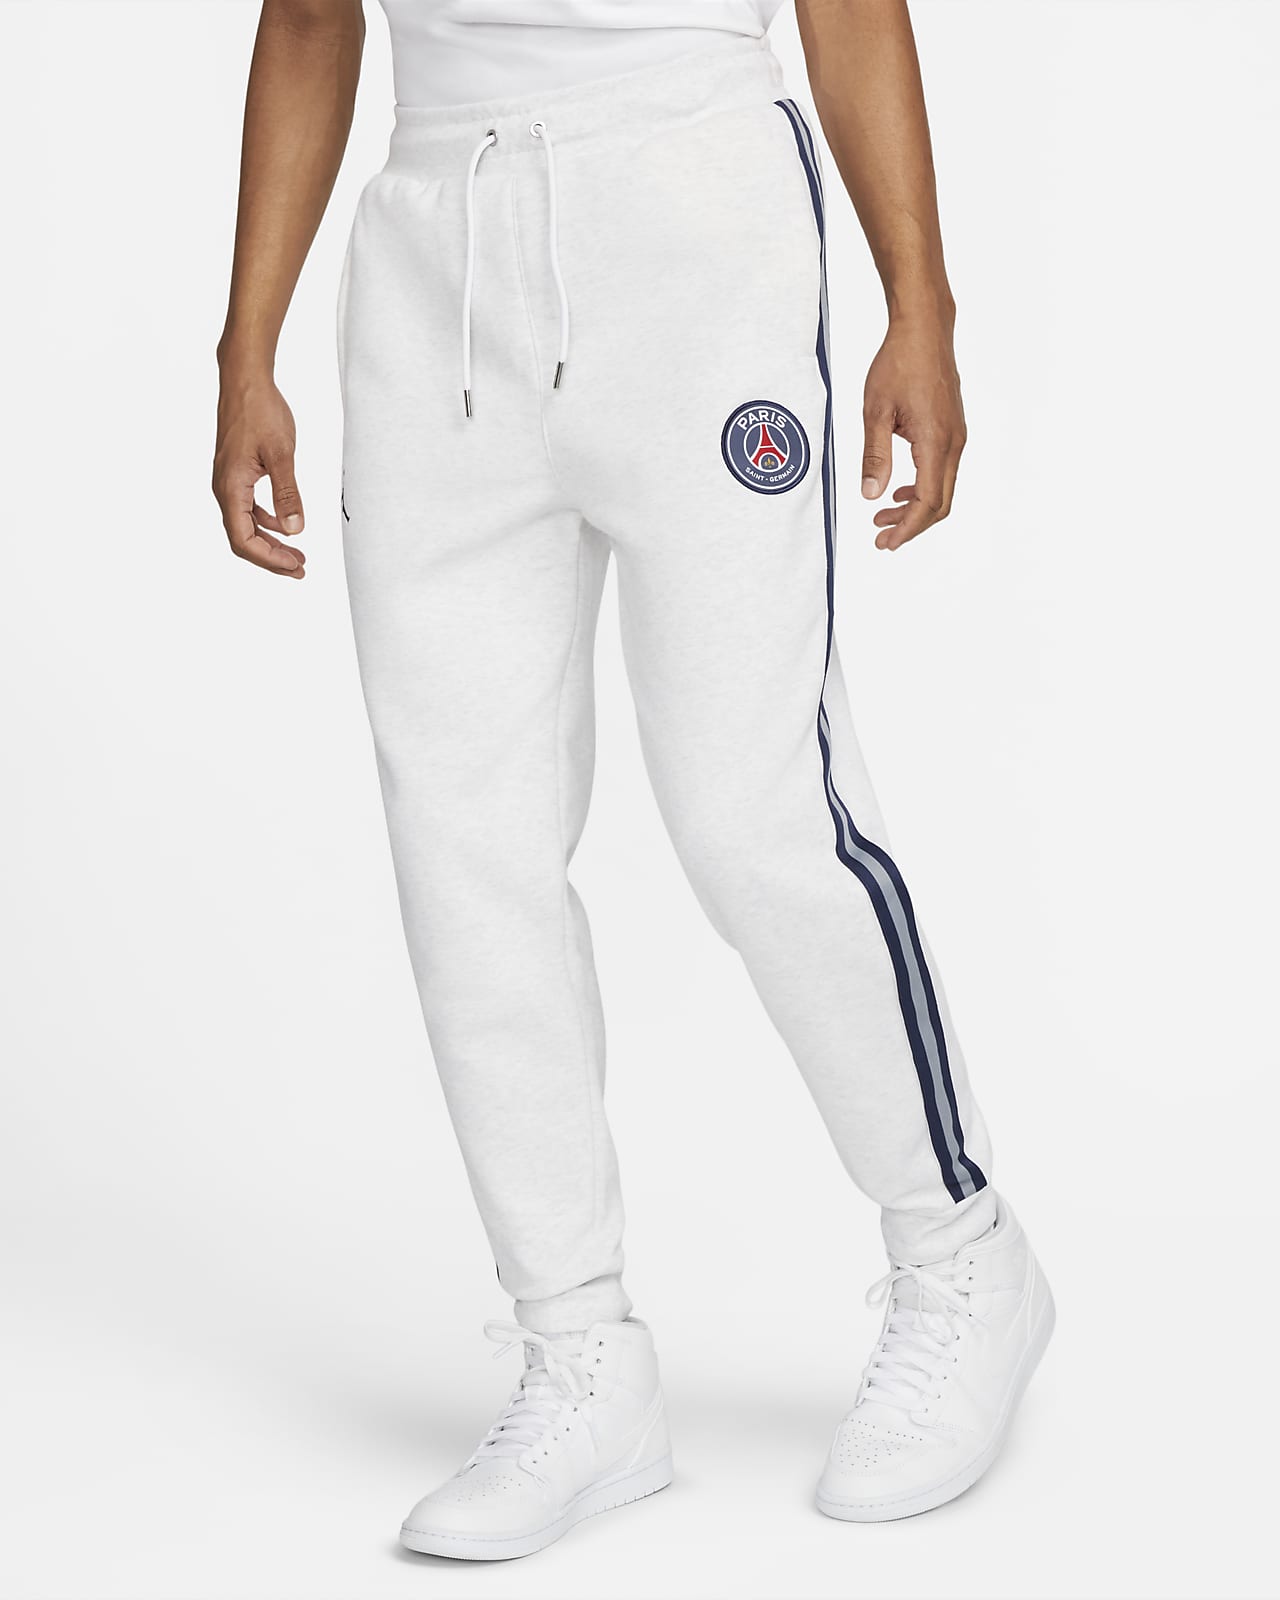 Pants de tejido Fleece para Paris Saint-Germain. Nike.com